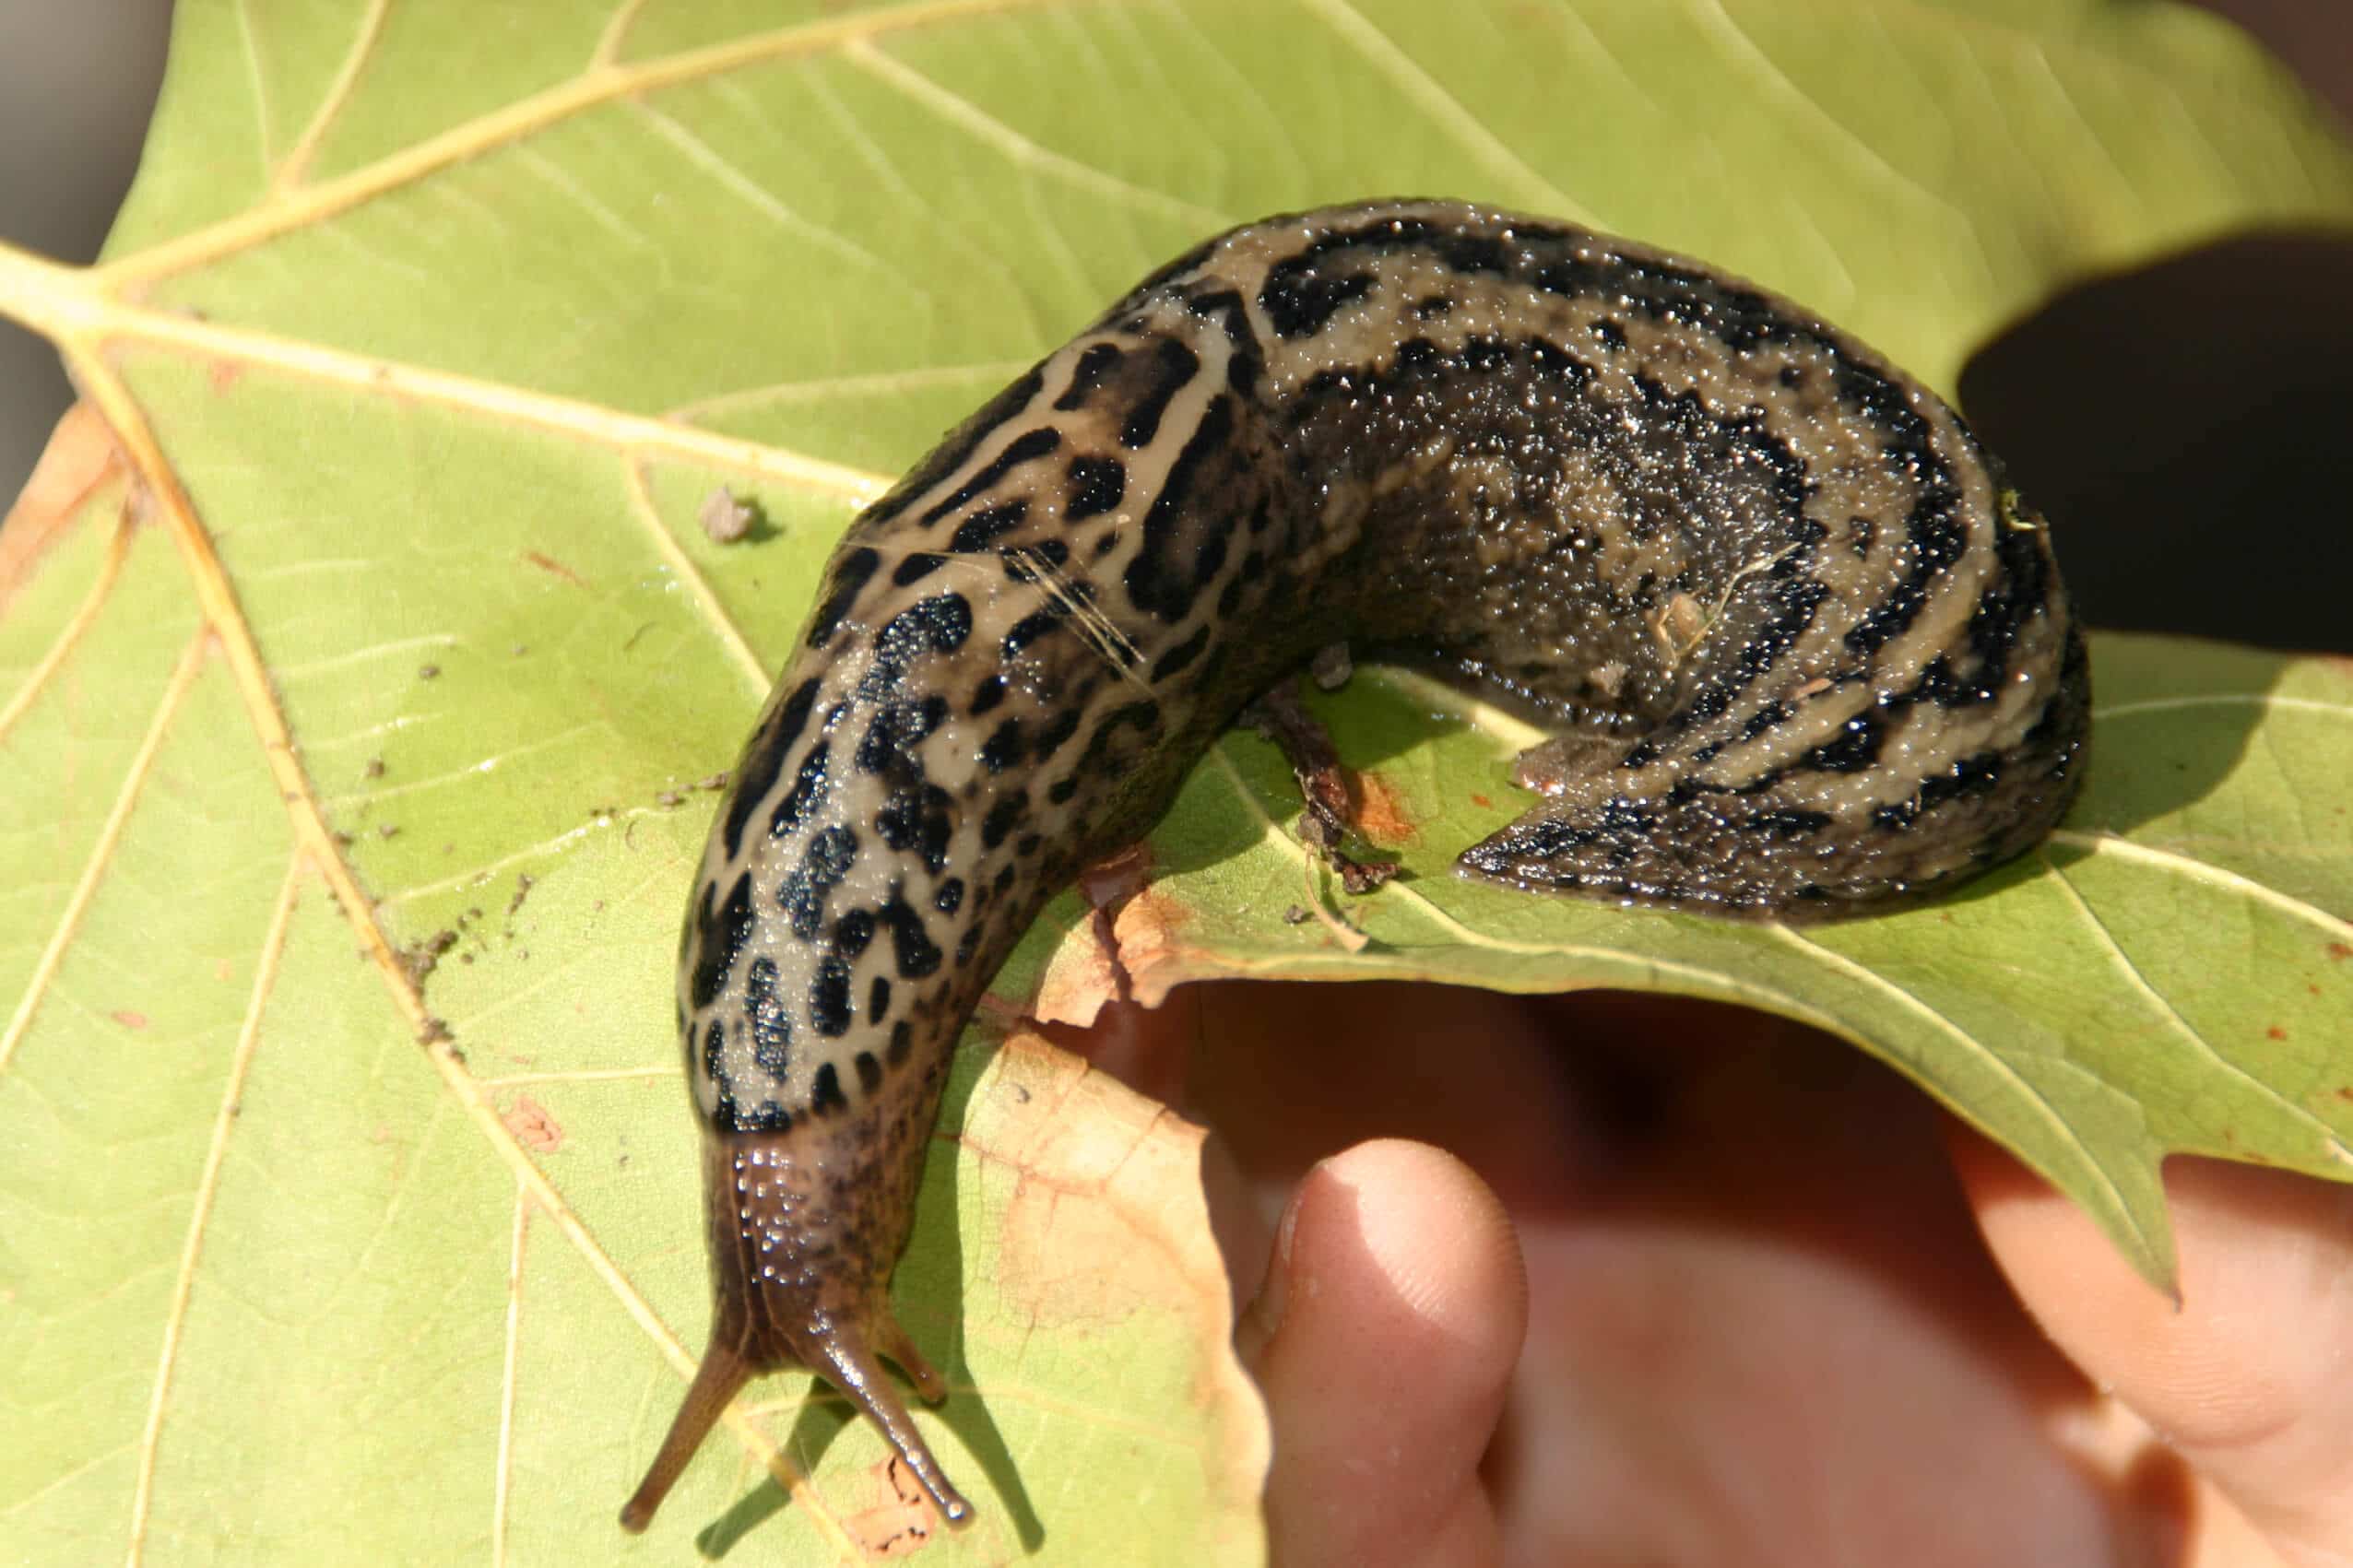 The Invasive But Edible Leopard Slug